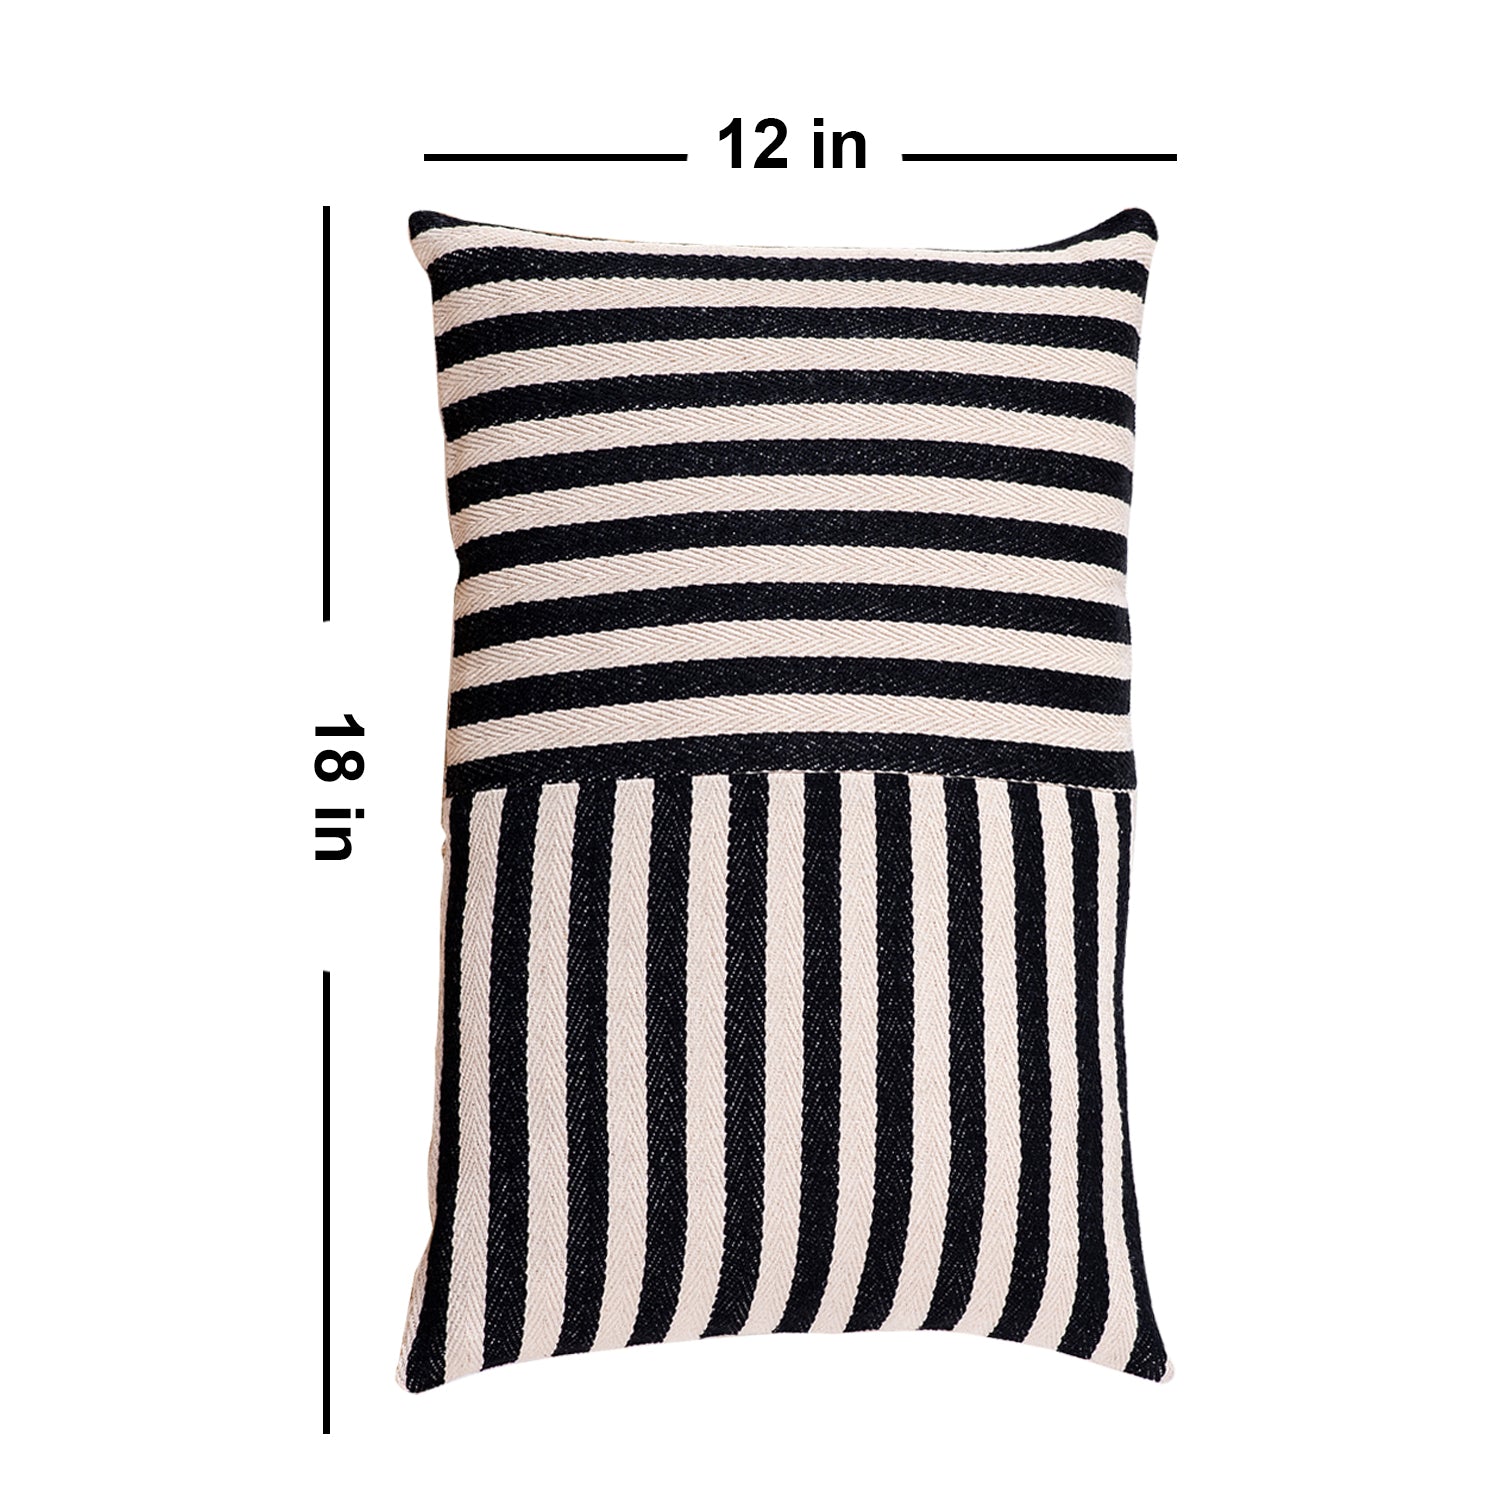 Zebra Cushion Cover  12x12 inches